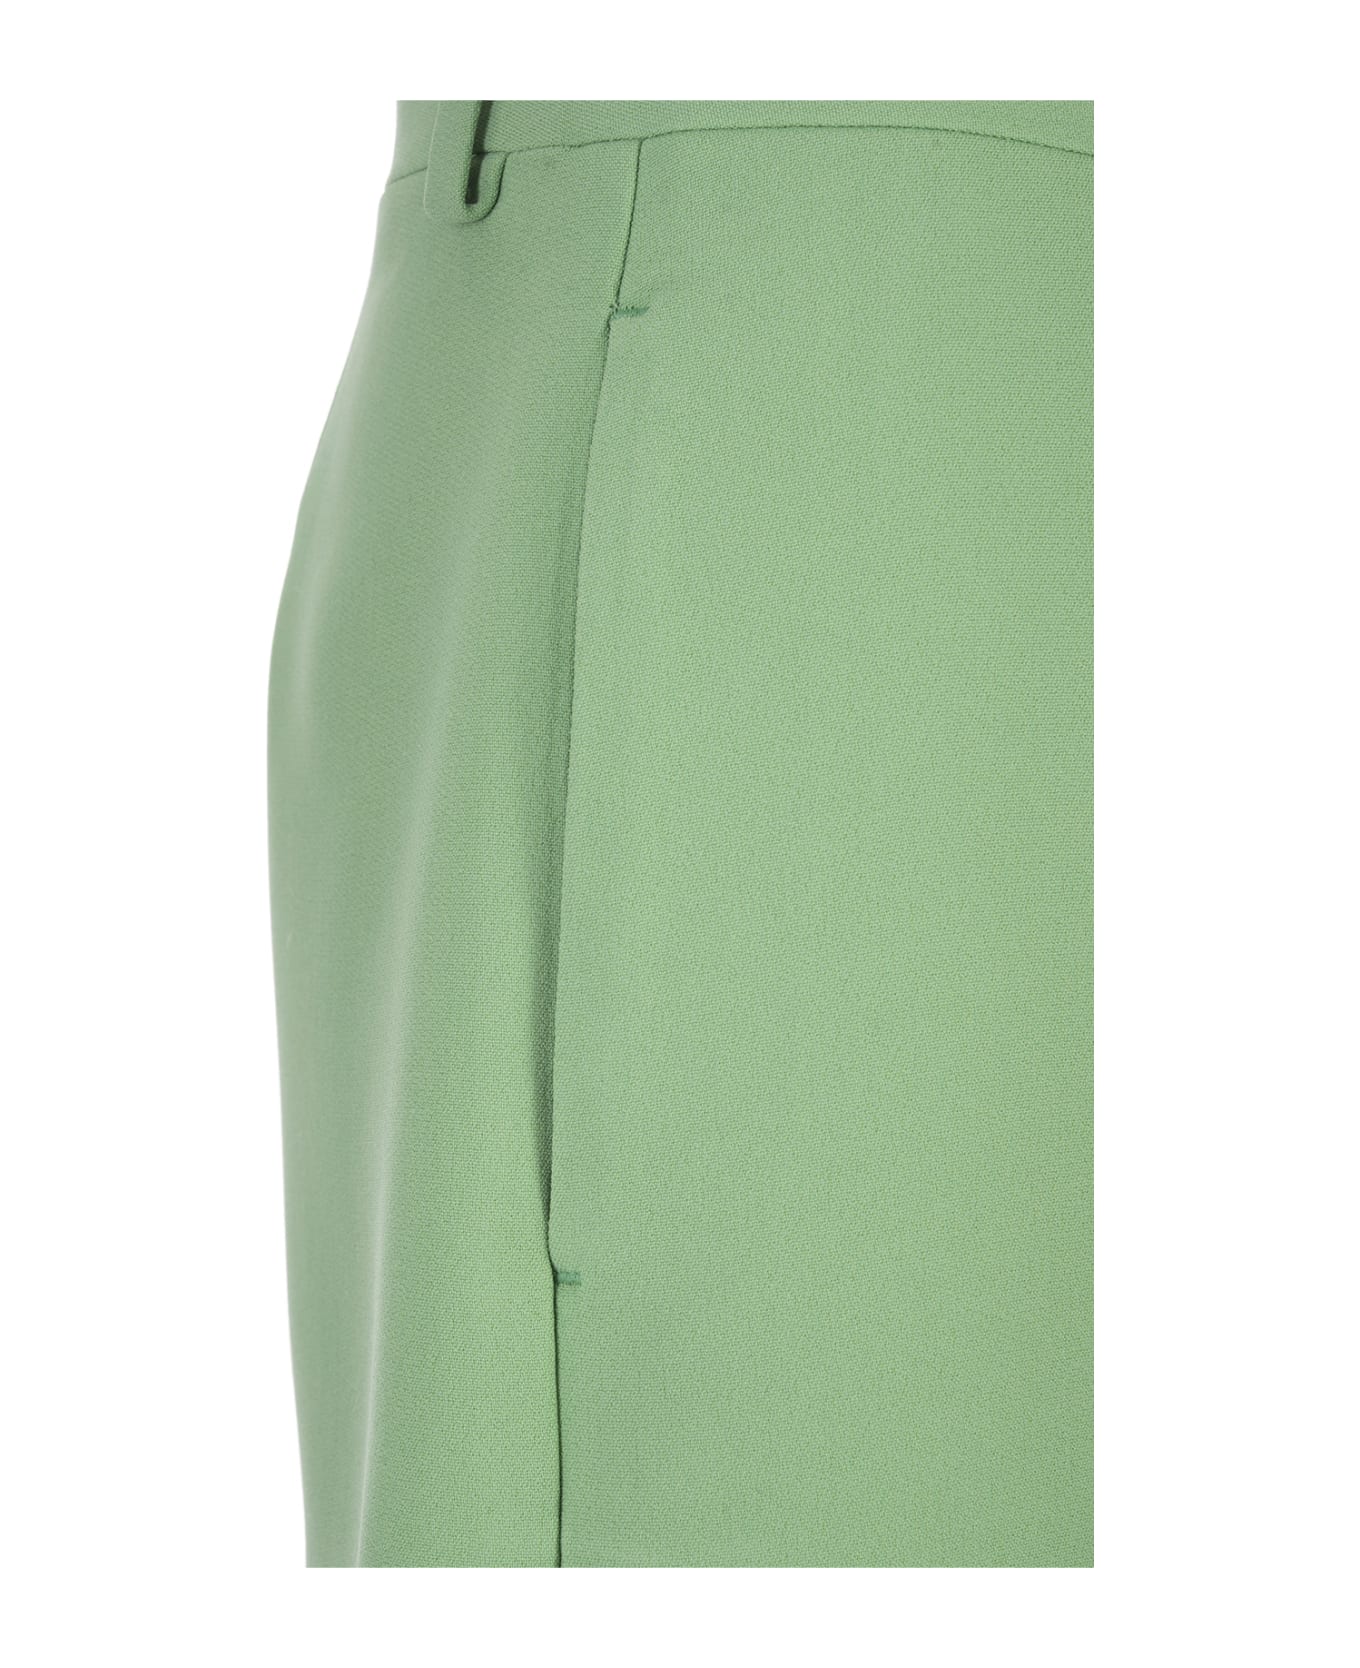 Ermanno Scervino Green Tailored Shorts - Green ショートパンツ